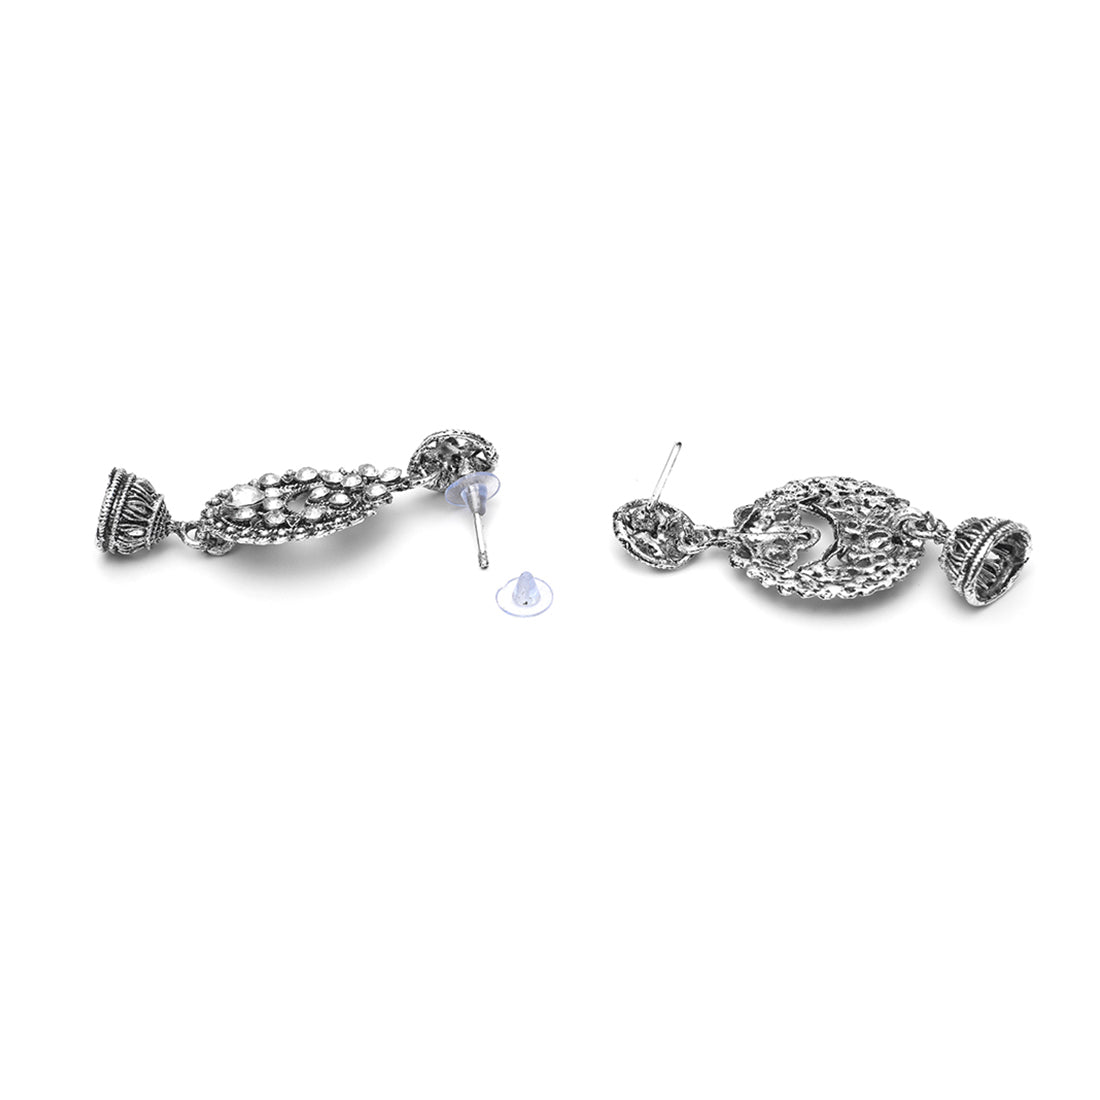 Set Of 3 Ethnic Silver Chambali Earrings With Small Jhumki Danglers